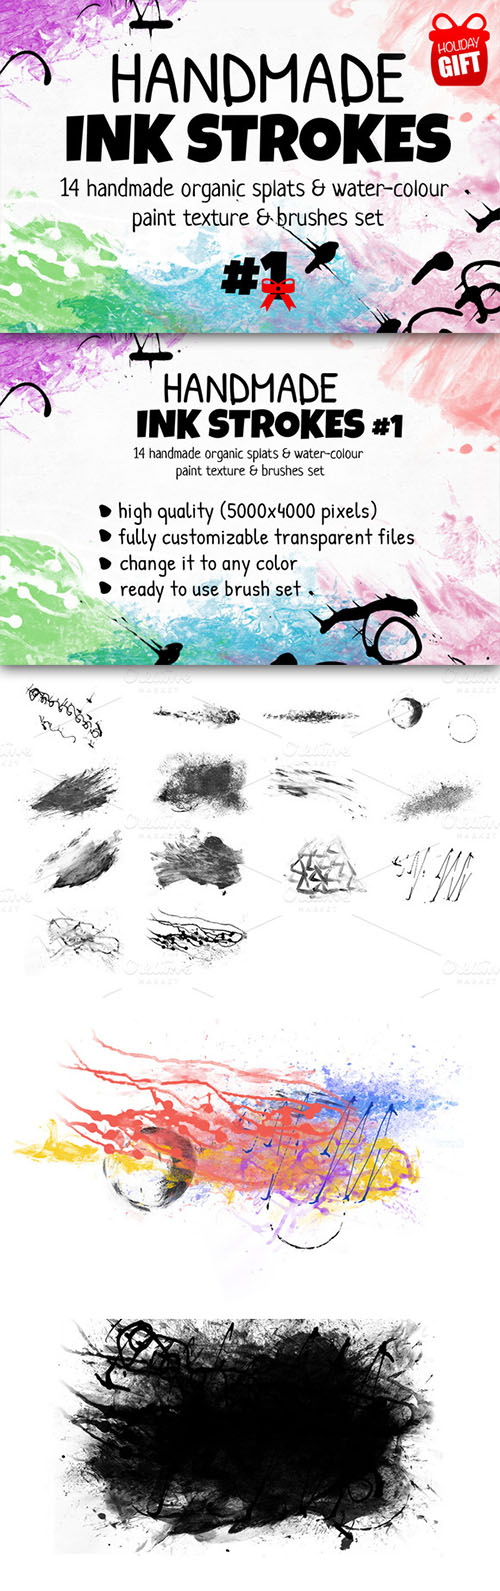 Handmade Ink Strokes Photoshop Brushes